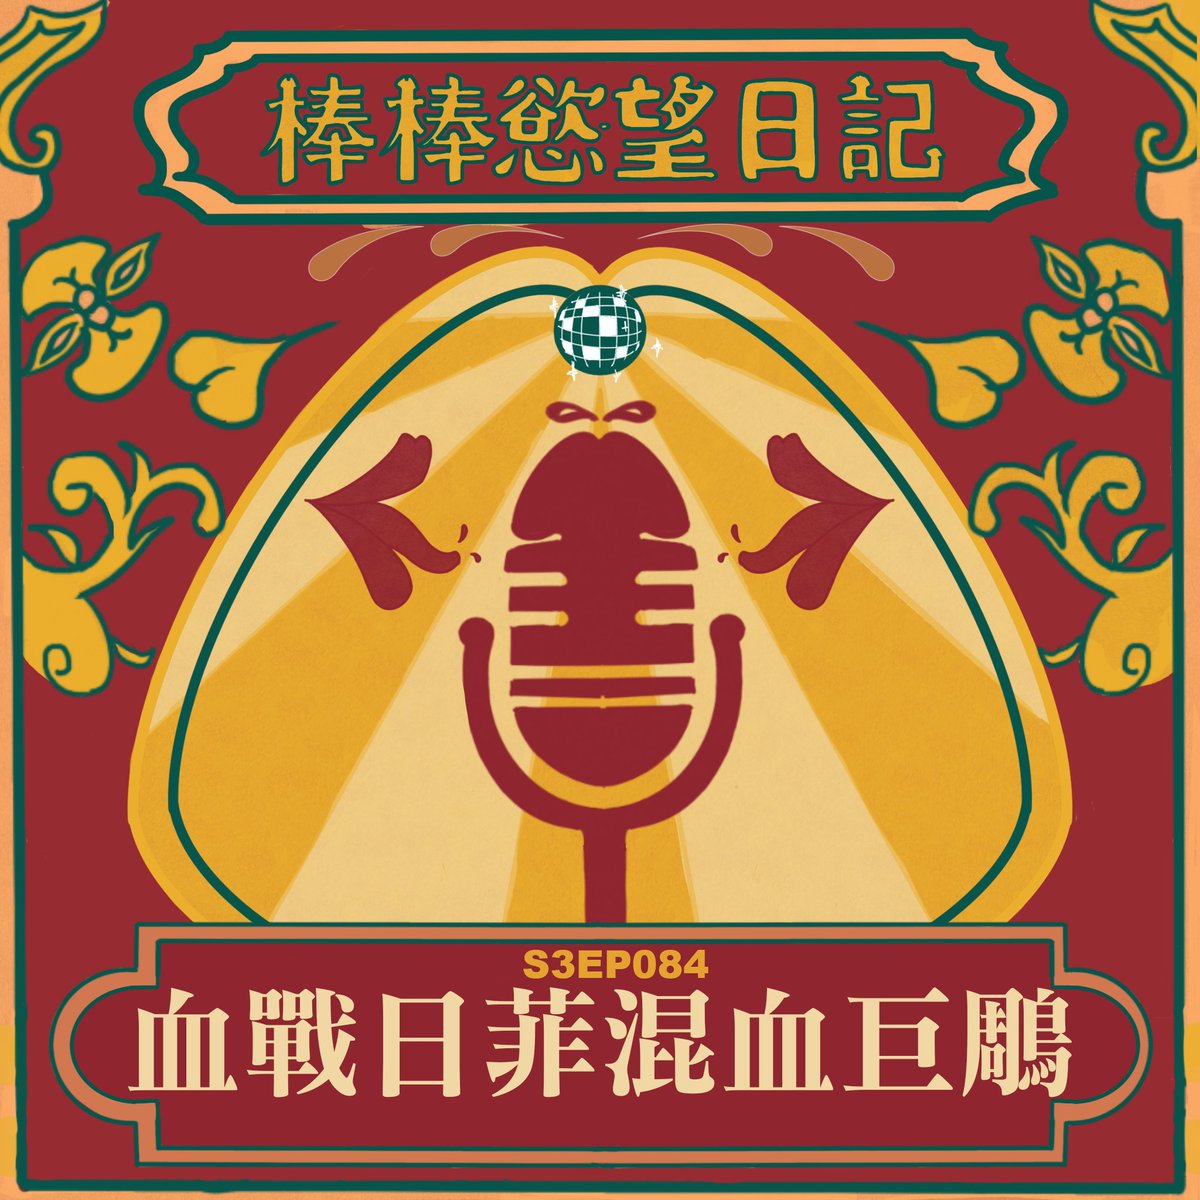 #最會叫的男同志Podcast  收聽請至reurl.cc/QR6p40

#喜劇 #同志 #gay #taiwanpodcast #chinesepodcast #中文podcast #台灣podcast #podcaster #podcastlife #podcasting #spotifypodcast #applepodcast #applepodcasts #kkbox #kkboxpodcast #firstory #soundon #gaypodcast